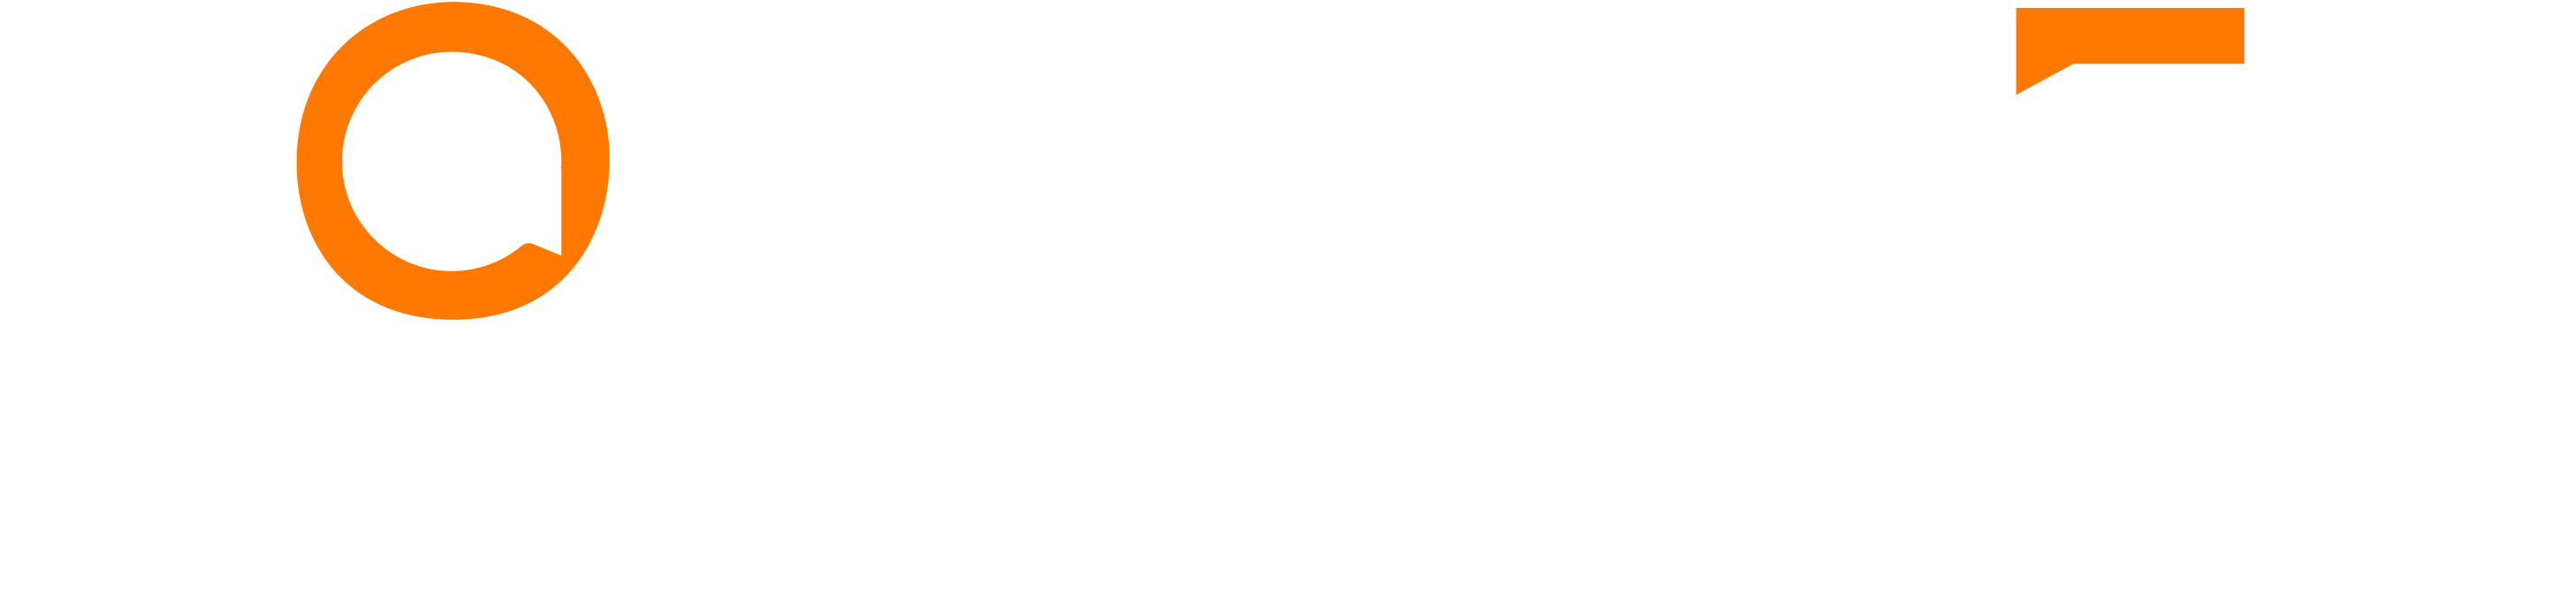 consumer empire logo